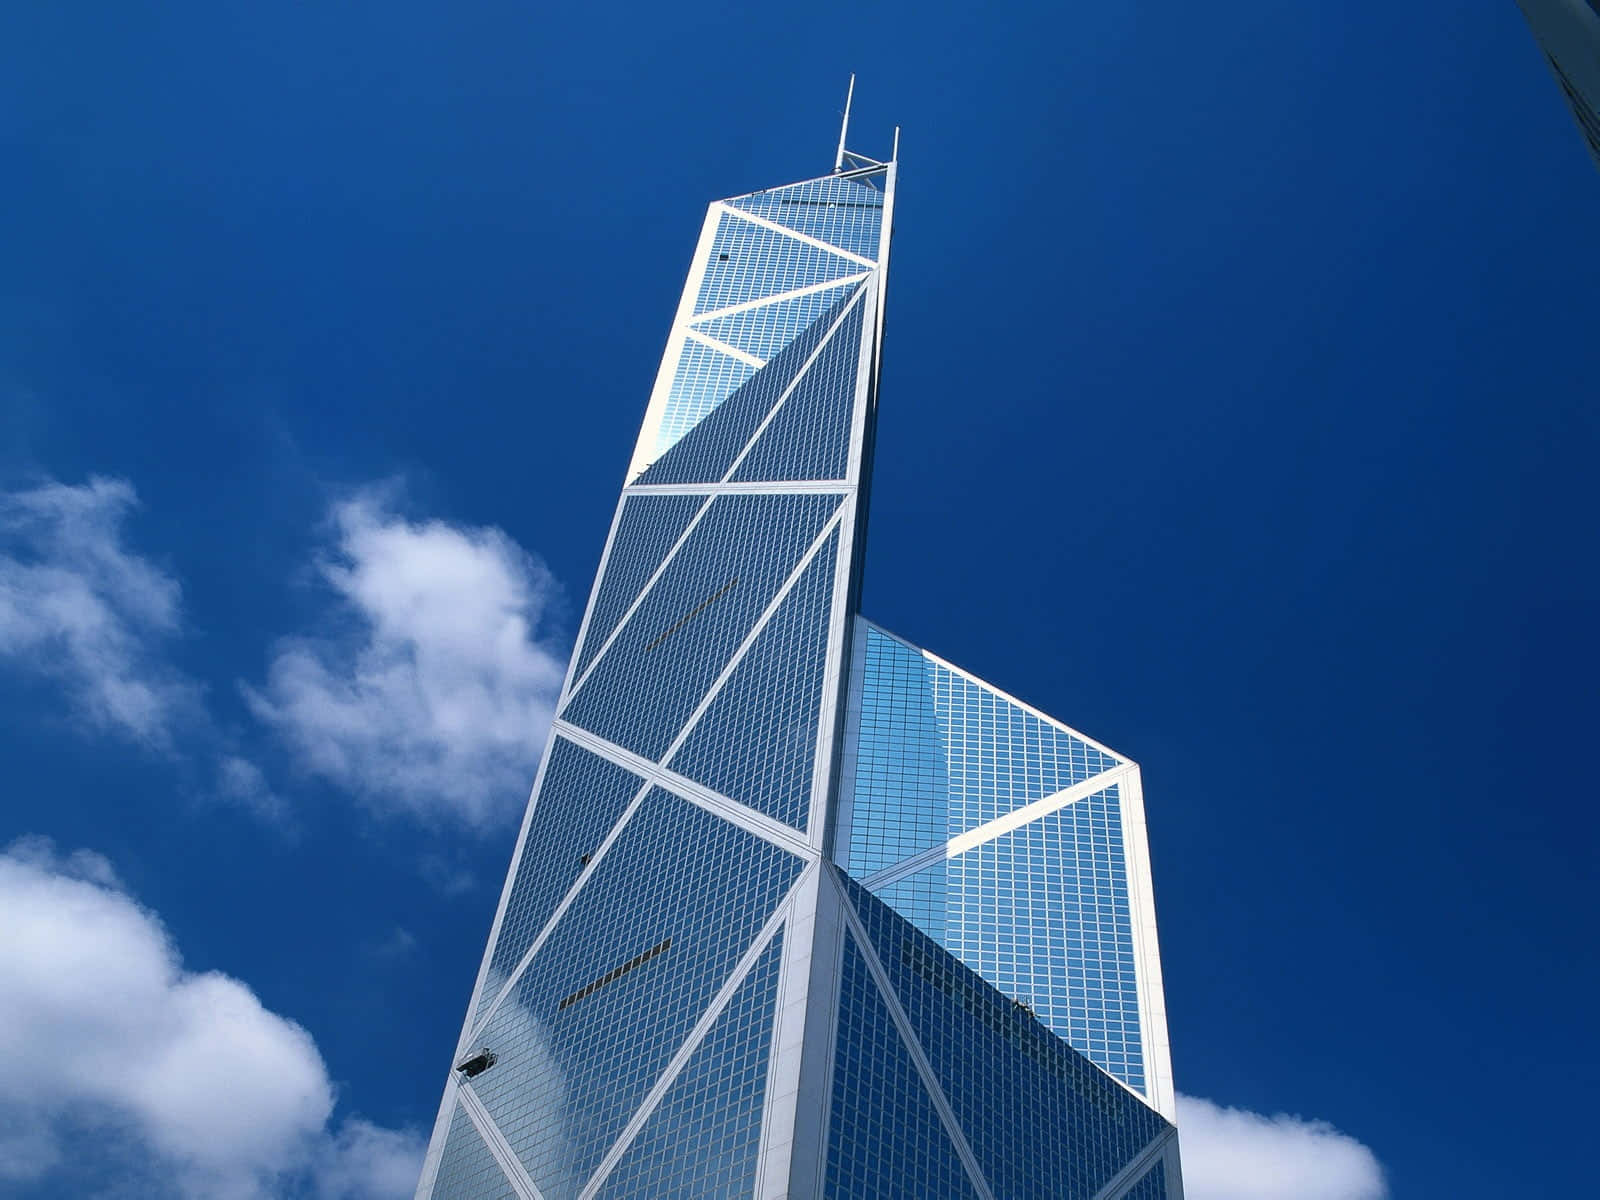 A Tall Building With A Blue Sky